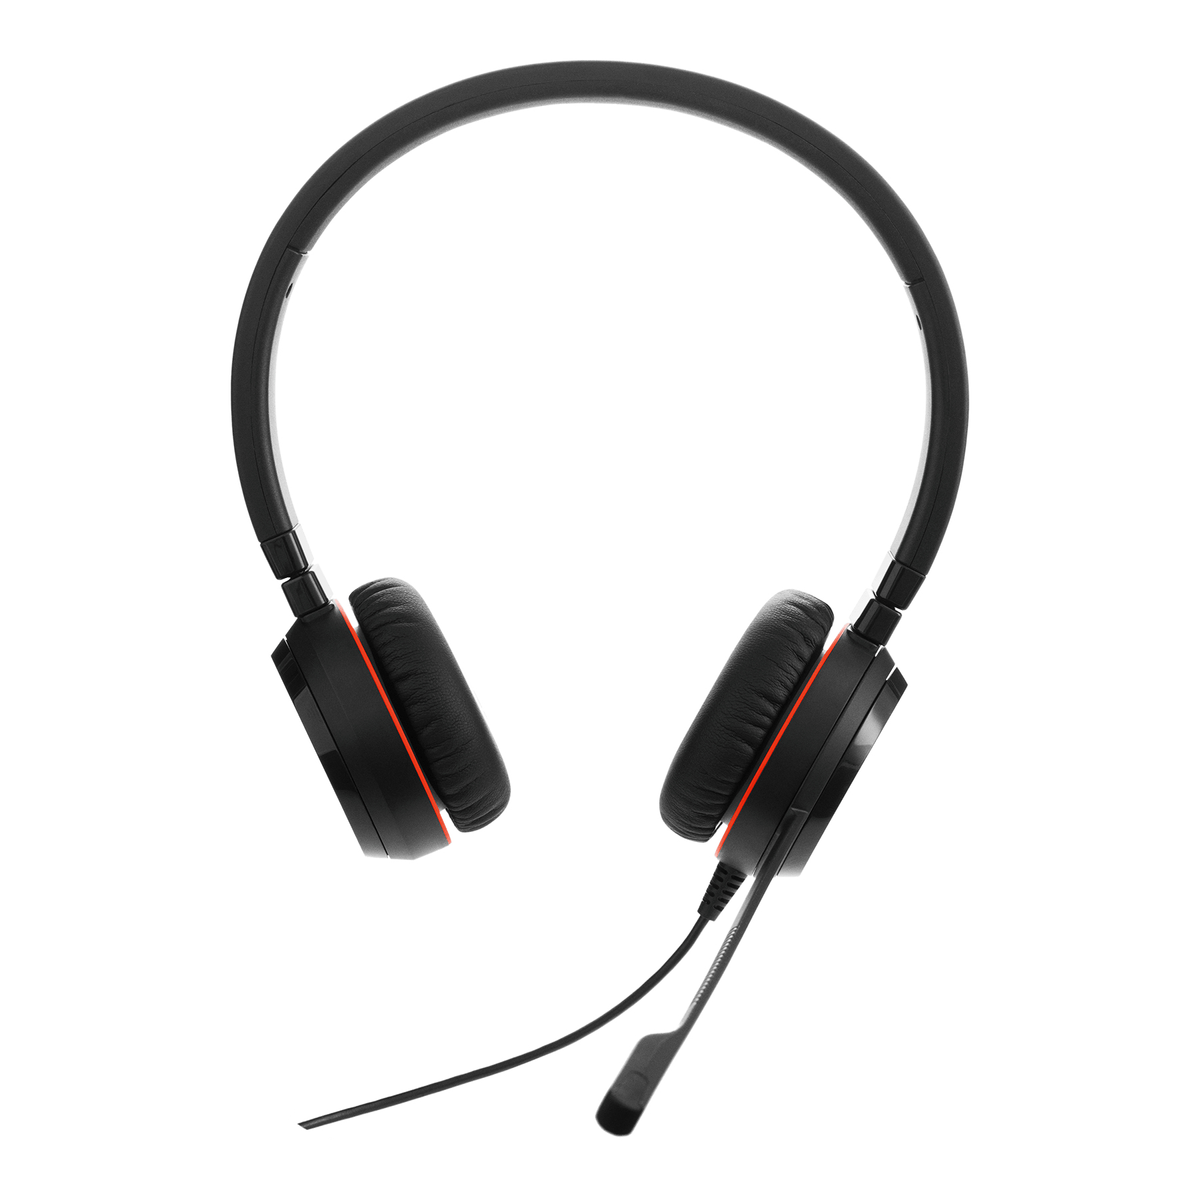 MS schwarz II On-ear Evolve binaural, JABRA Headset 30